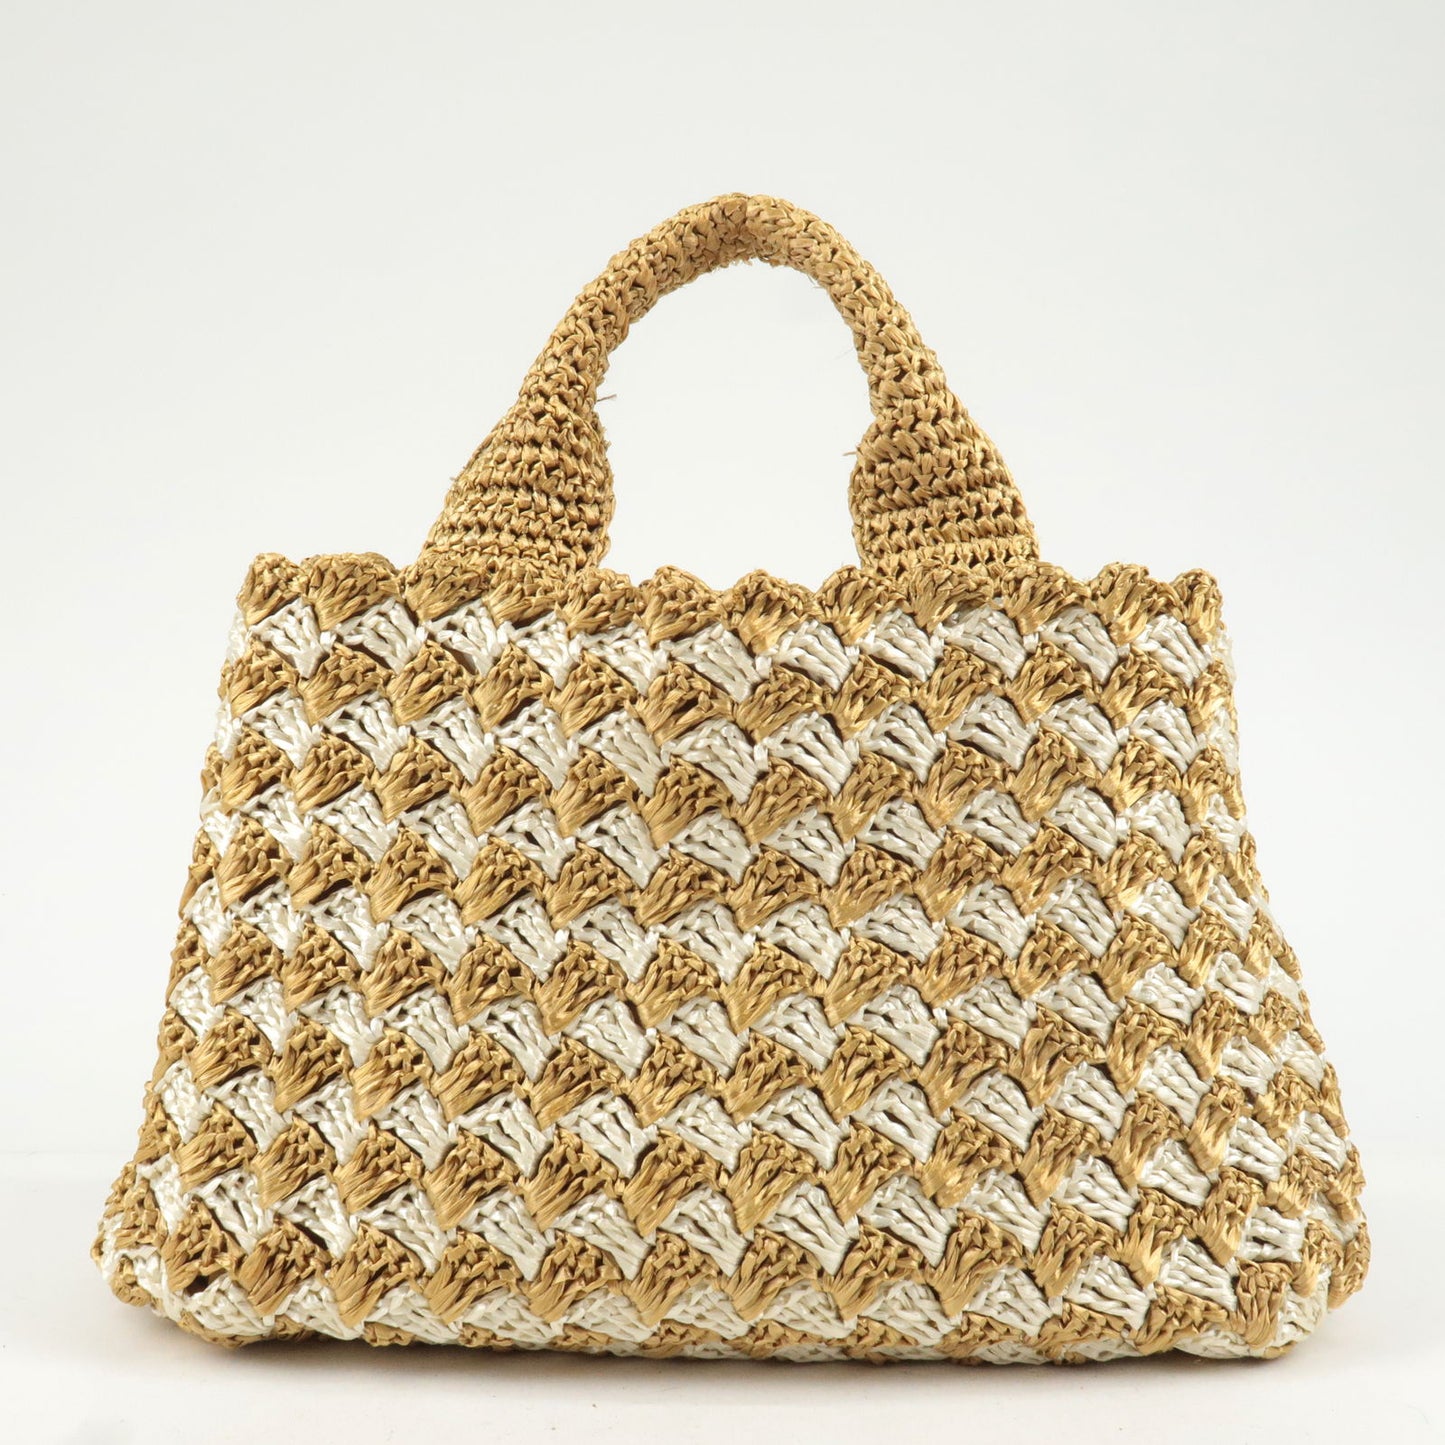 PRADA Logo Raffia Crochet Tote Bag Hand Bag Beige Ivory BN2303